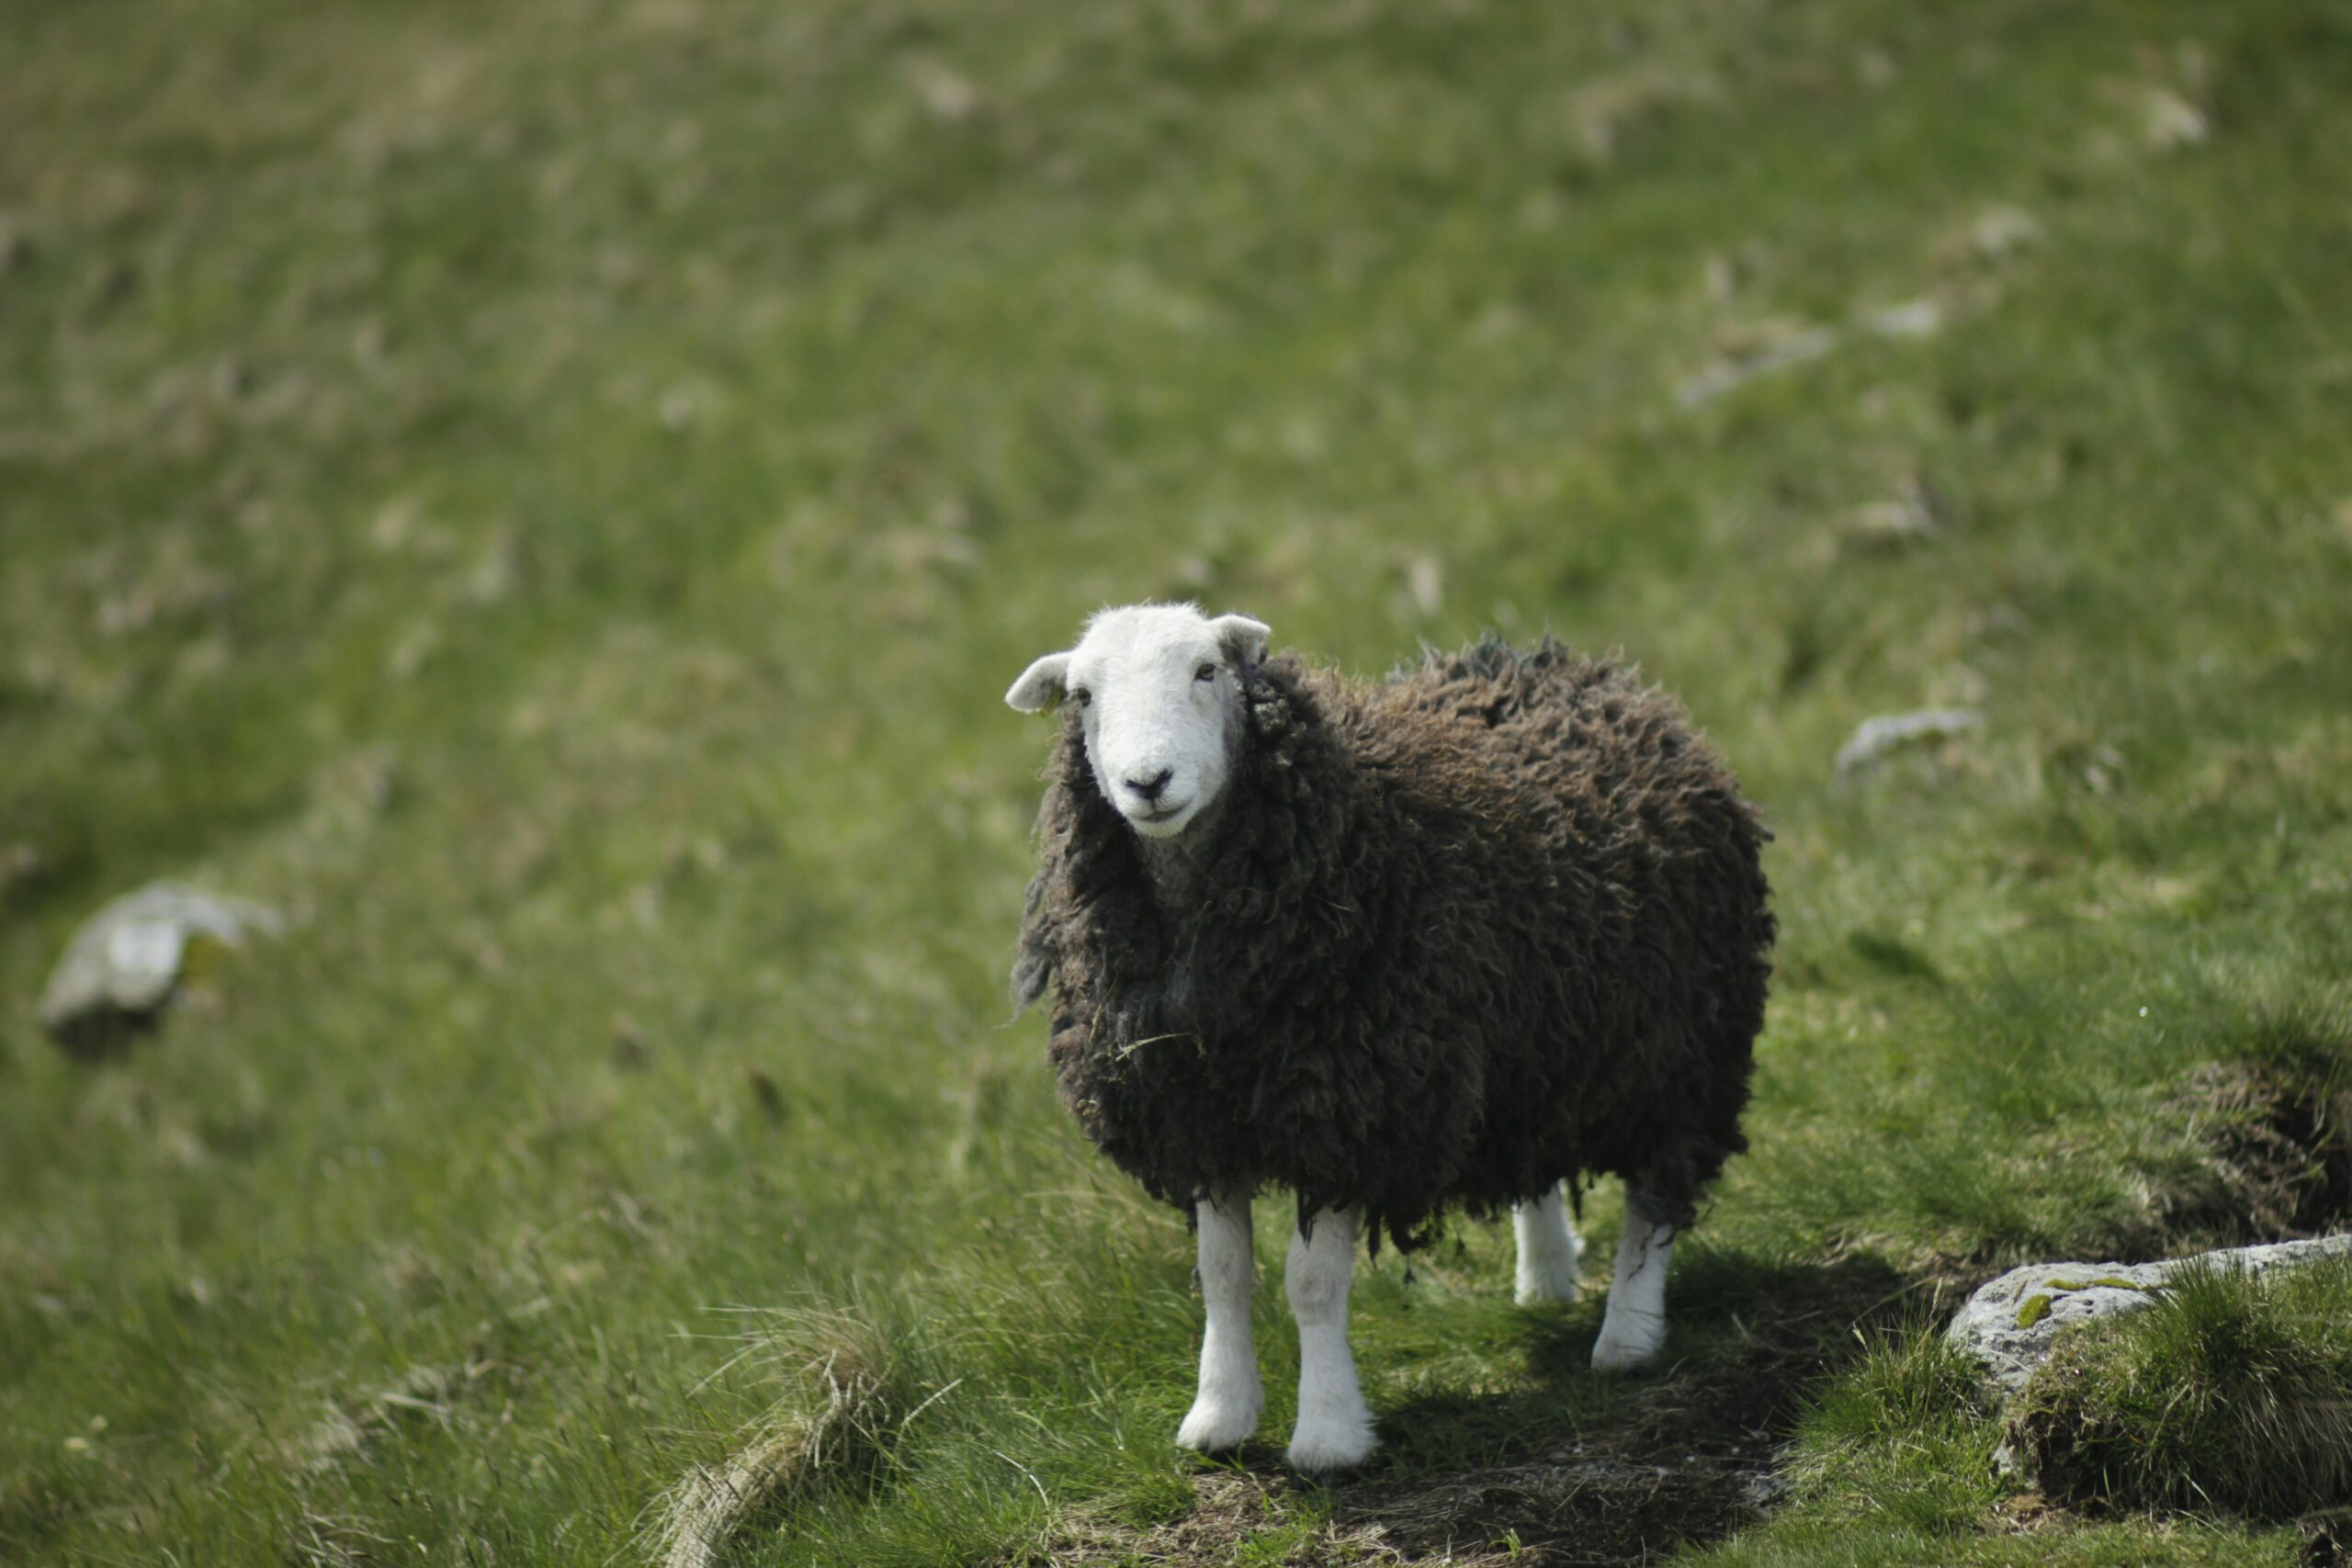 Baa baa Black sheep – Do you know its dark origin? #BlogchatterAtoZ